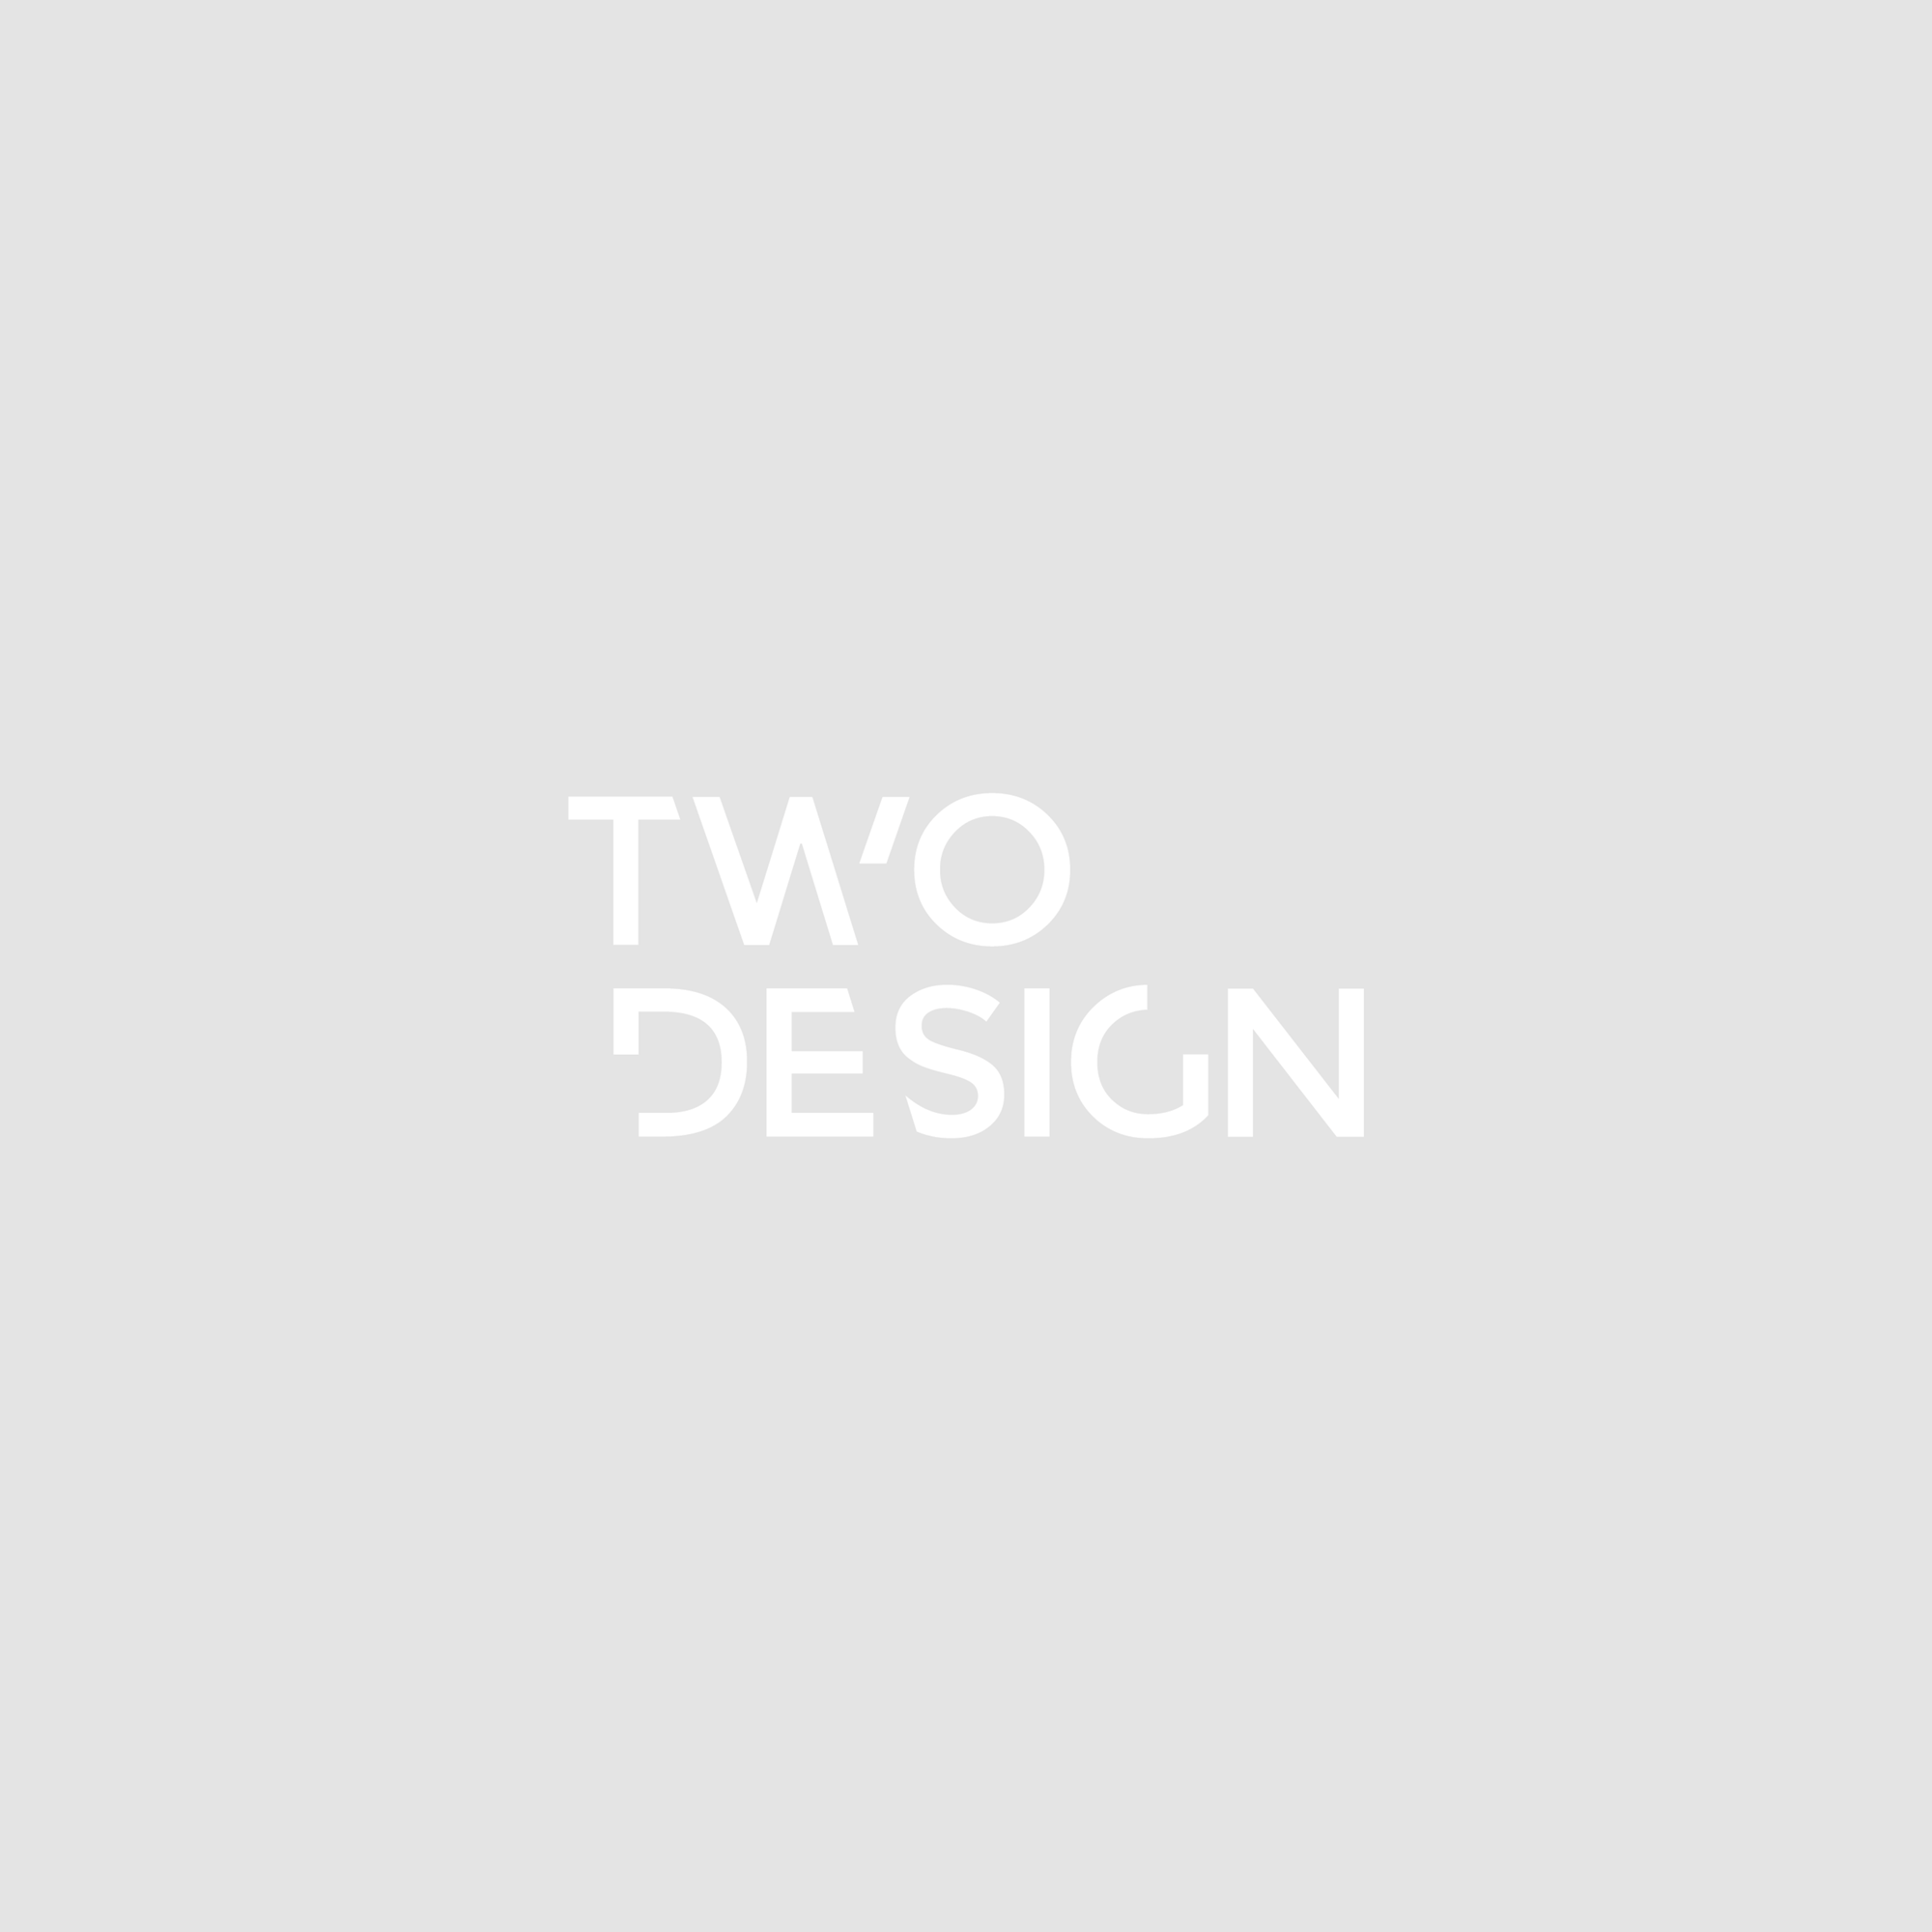 Two_design_placeholder 4.jpg